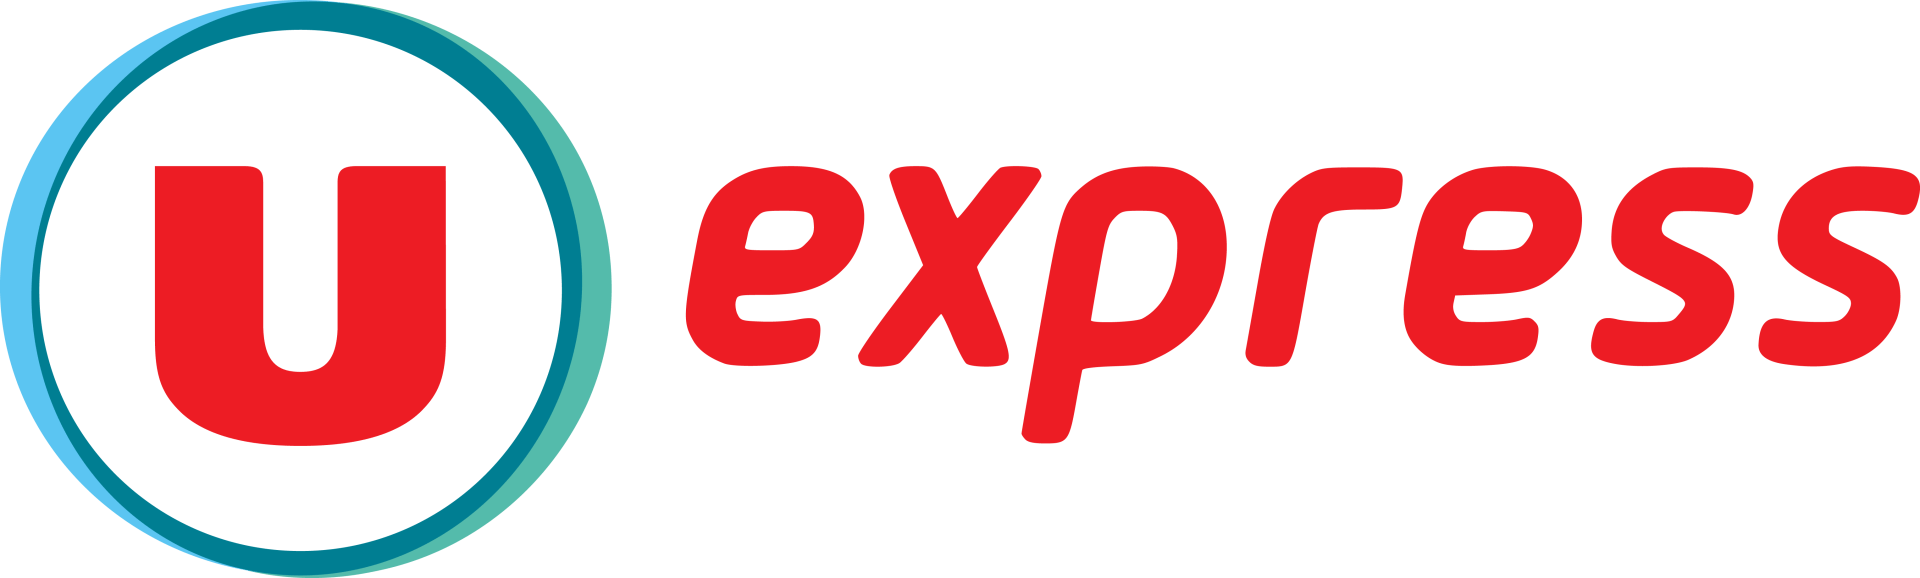 U Express logo officiel